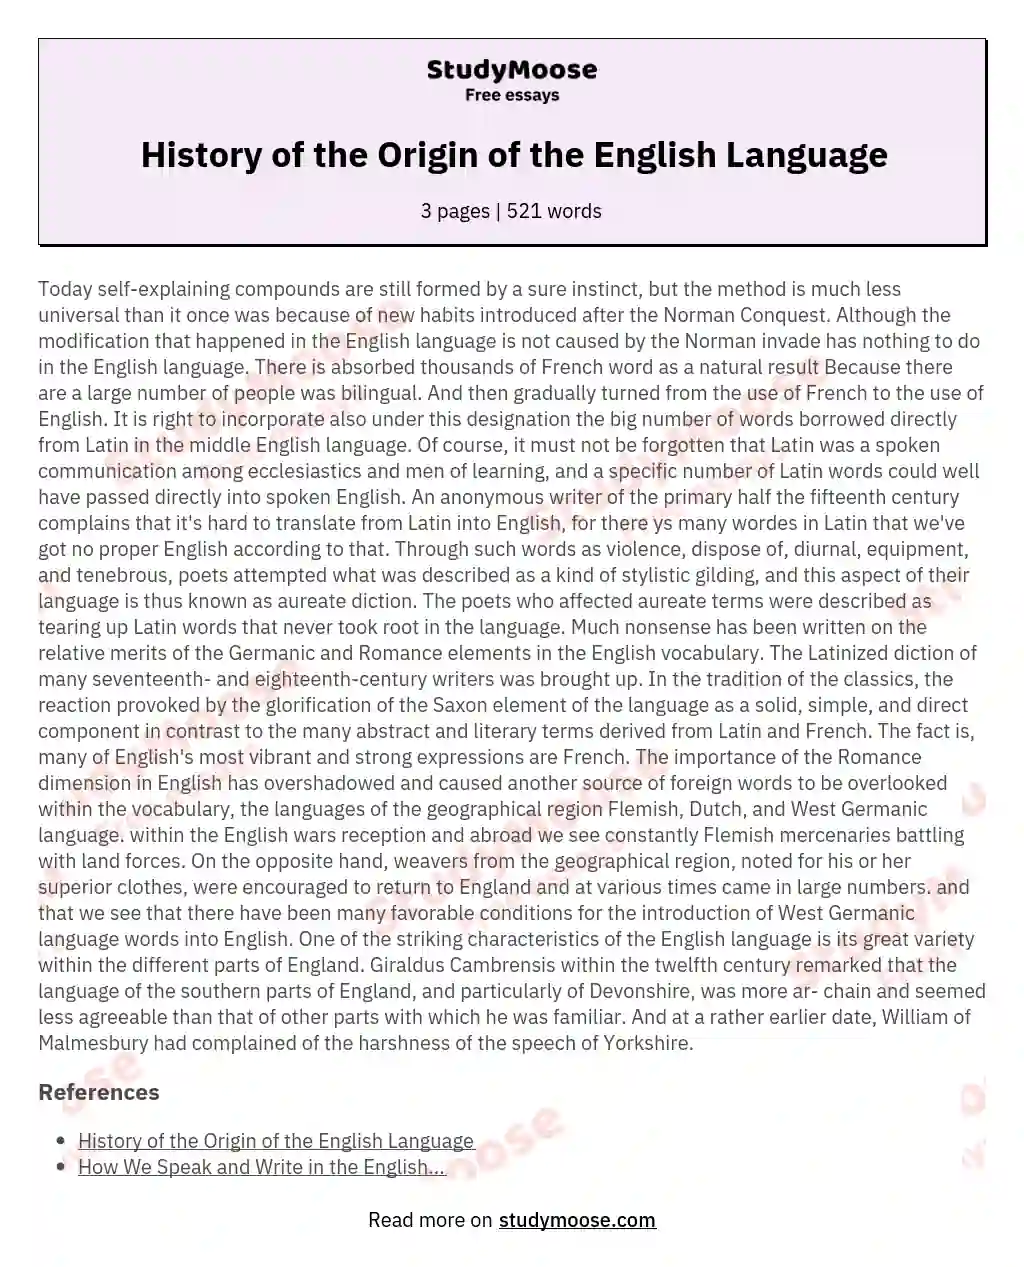 History of the Origin of the English Language essay